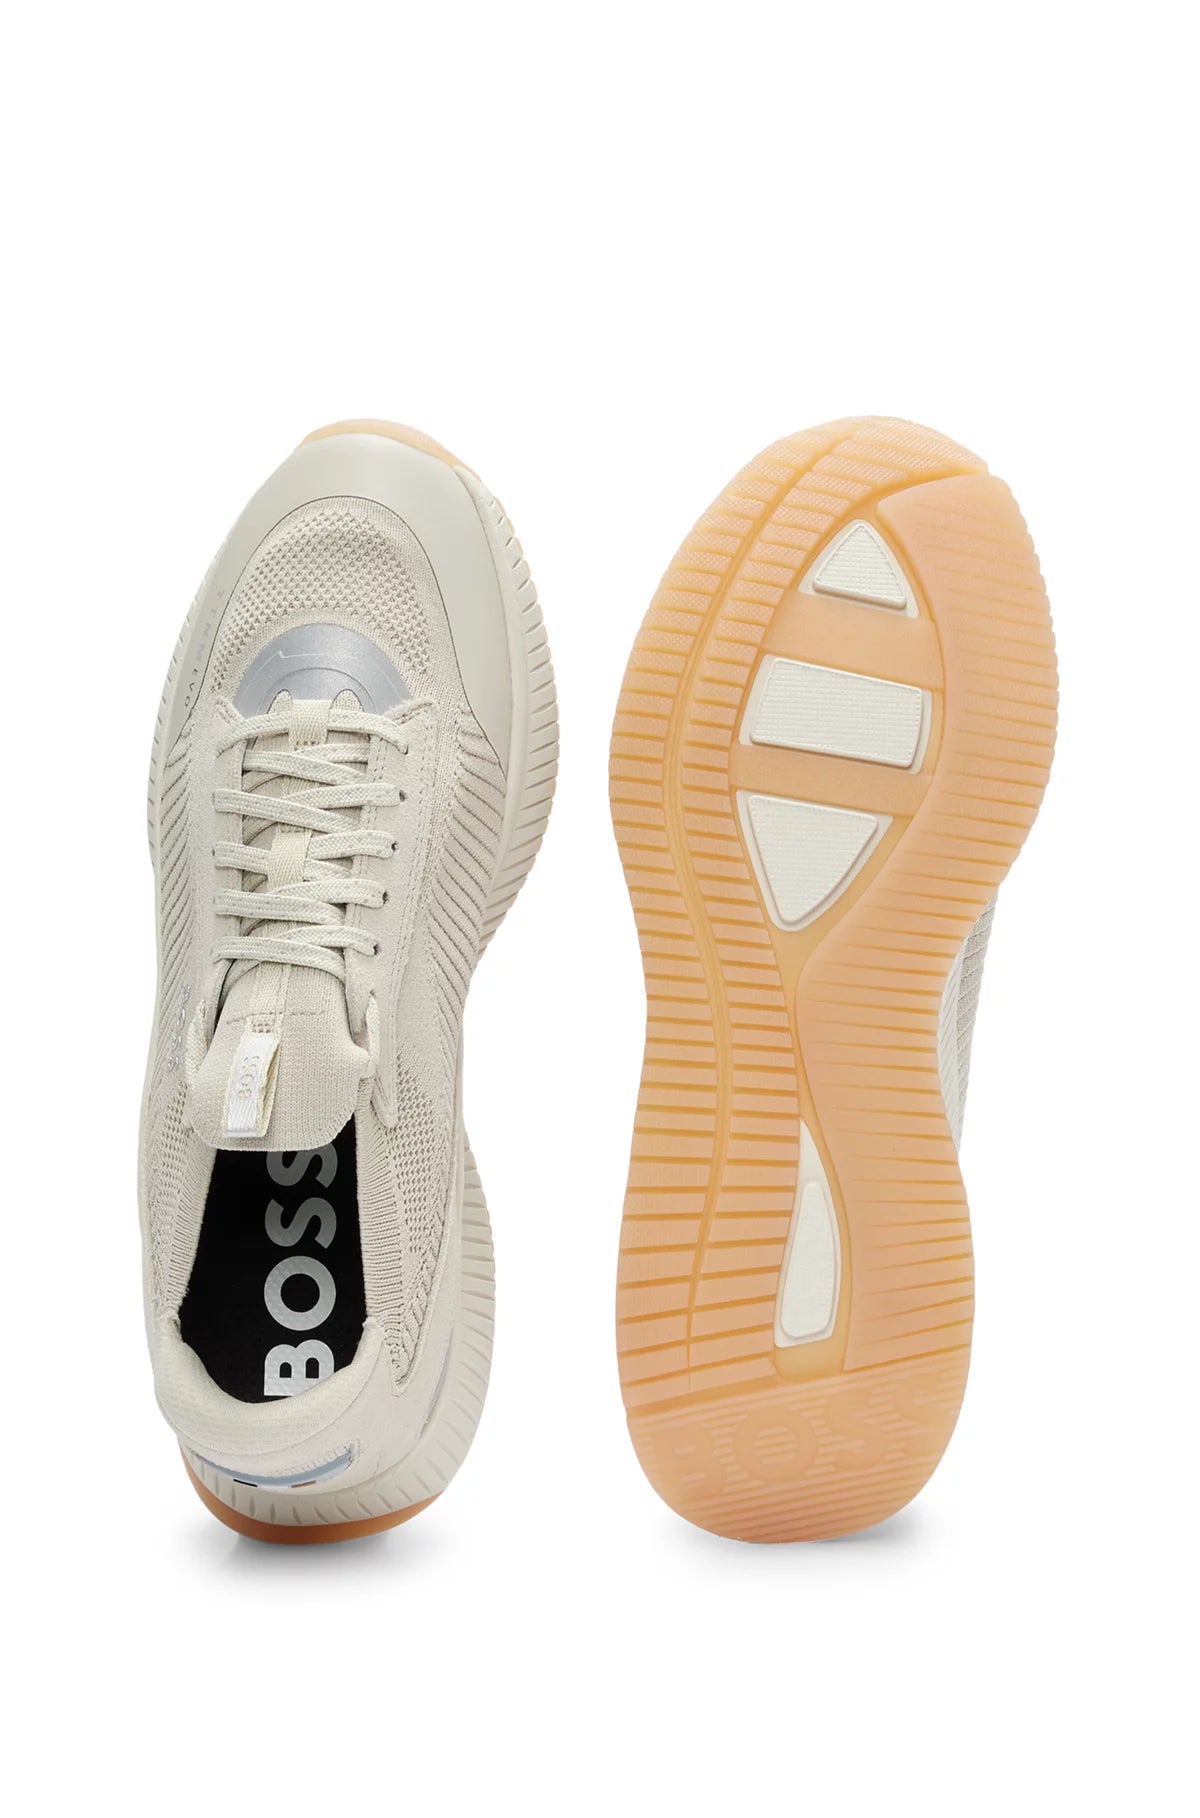 Hugo Boss Evo Shoe